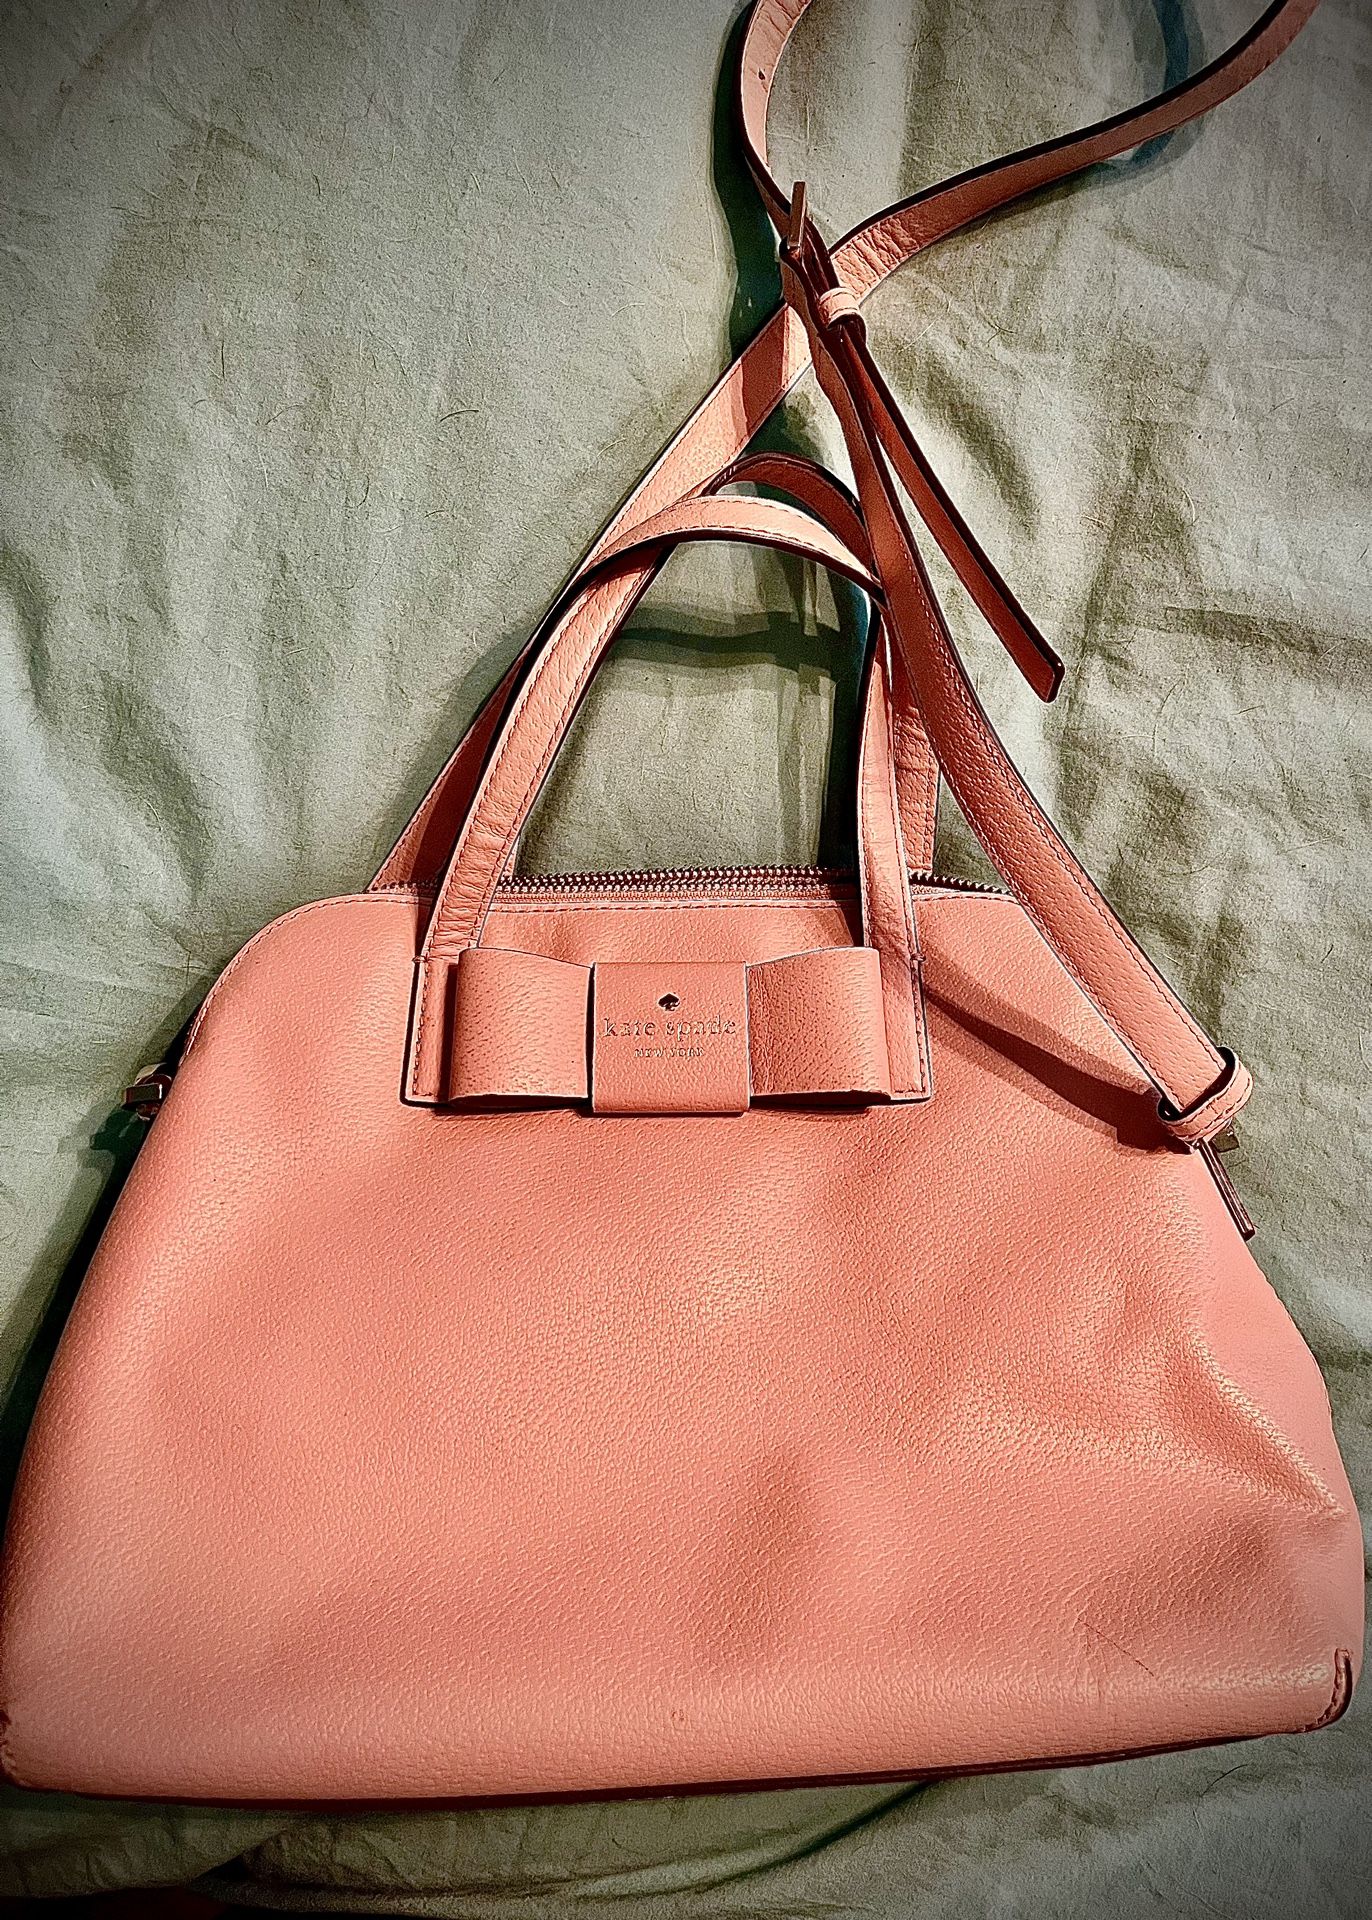 Kate Spade Pink Bow Bag